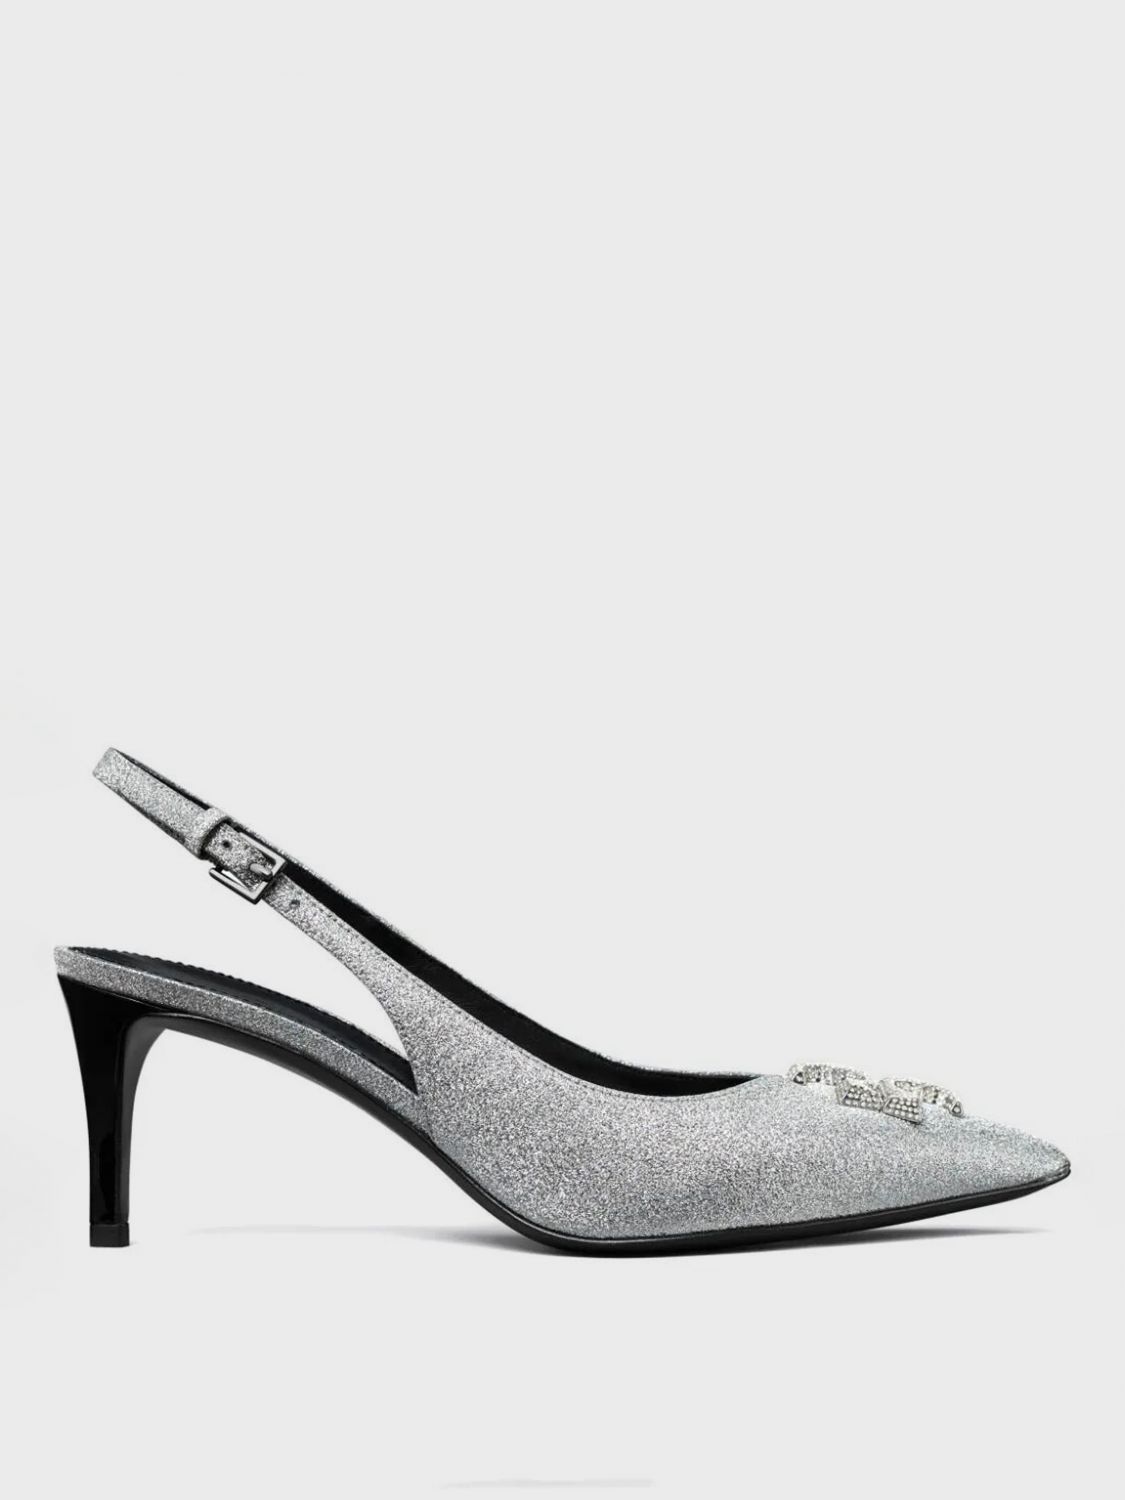 Tory Burch High Heel Shoes TORY BURCH Woman color Silver